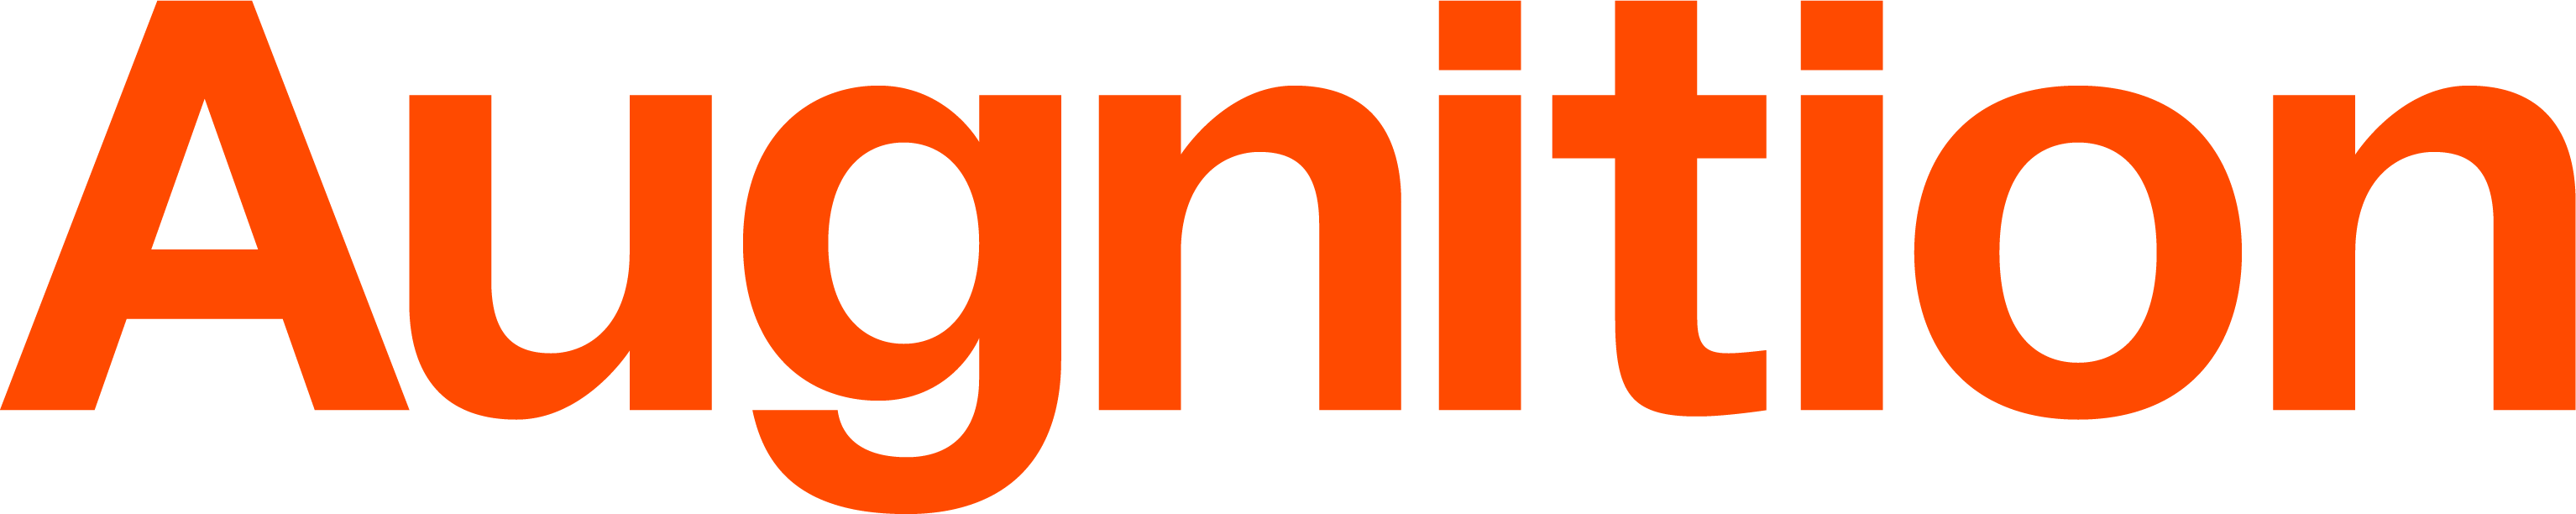 Augnition-Logo-Orange-102822